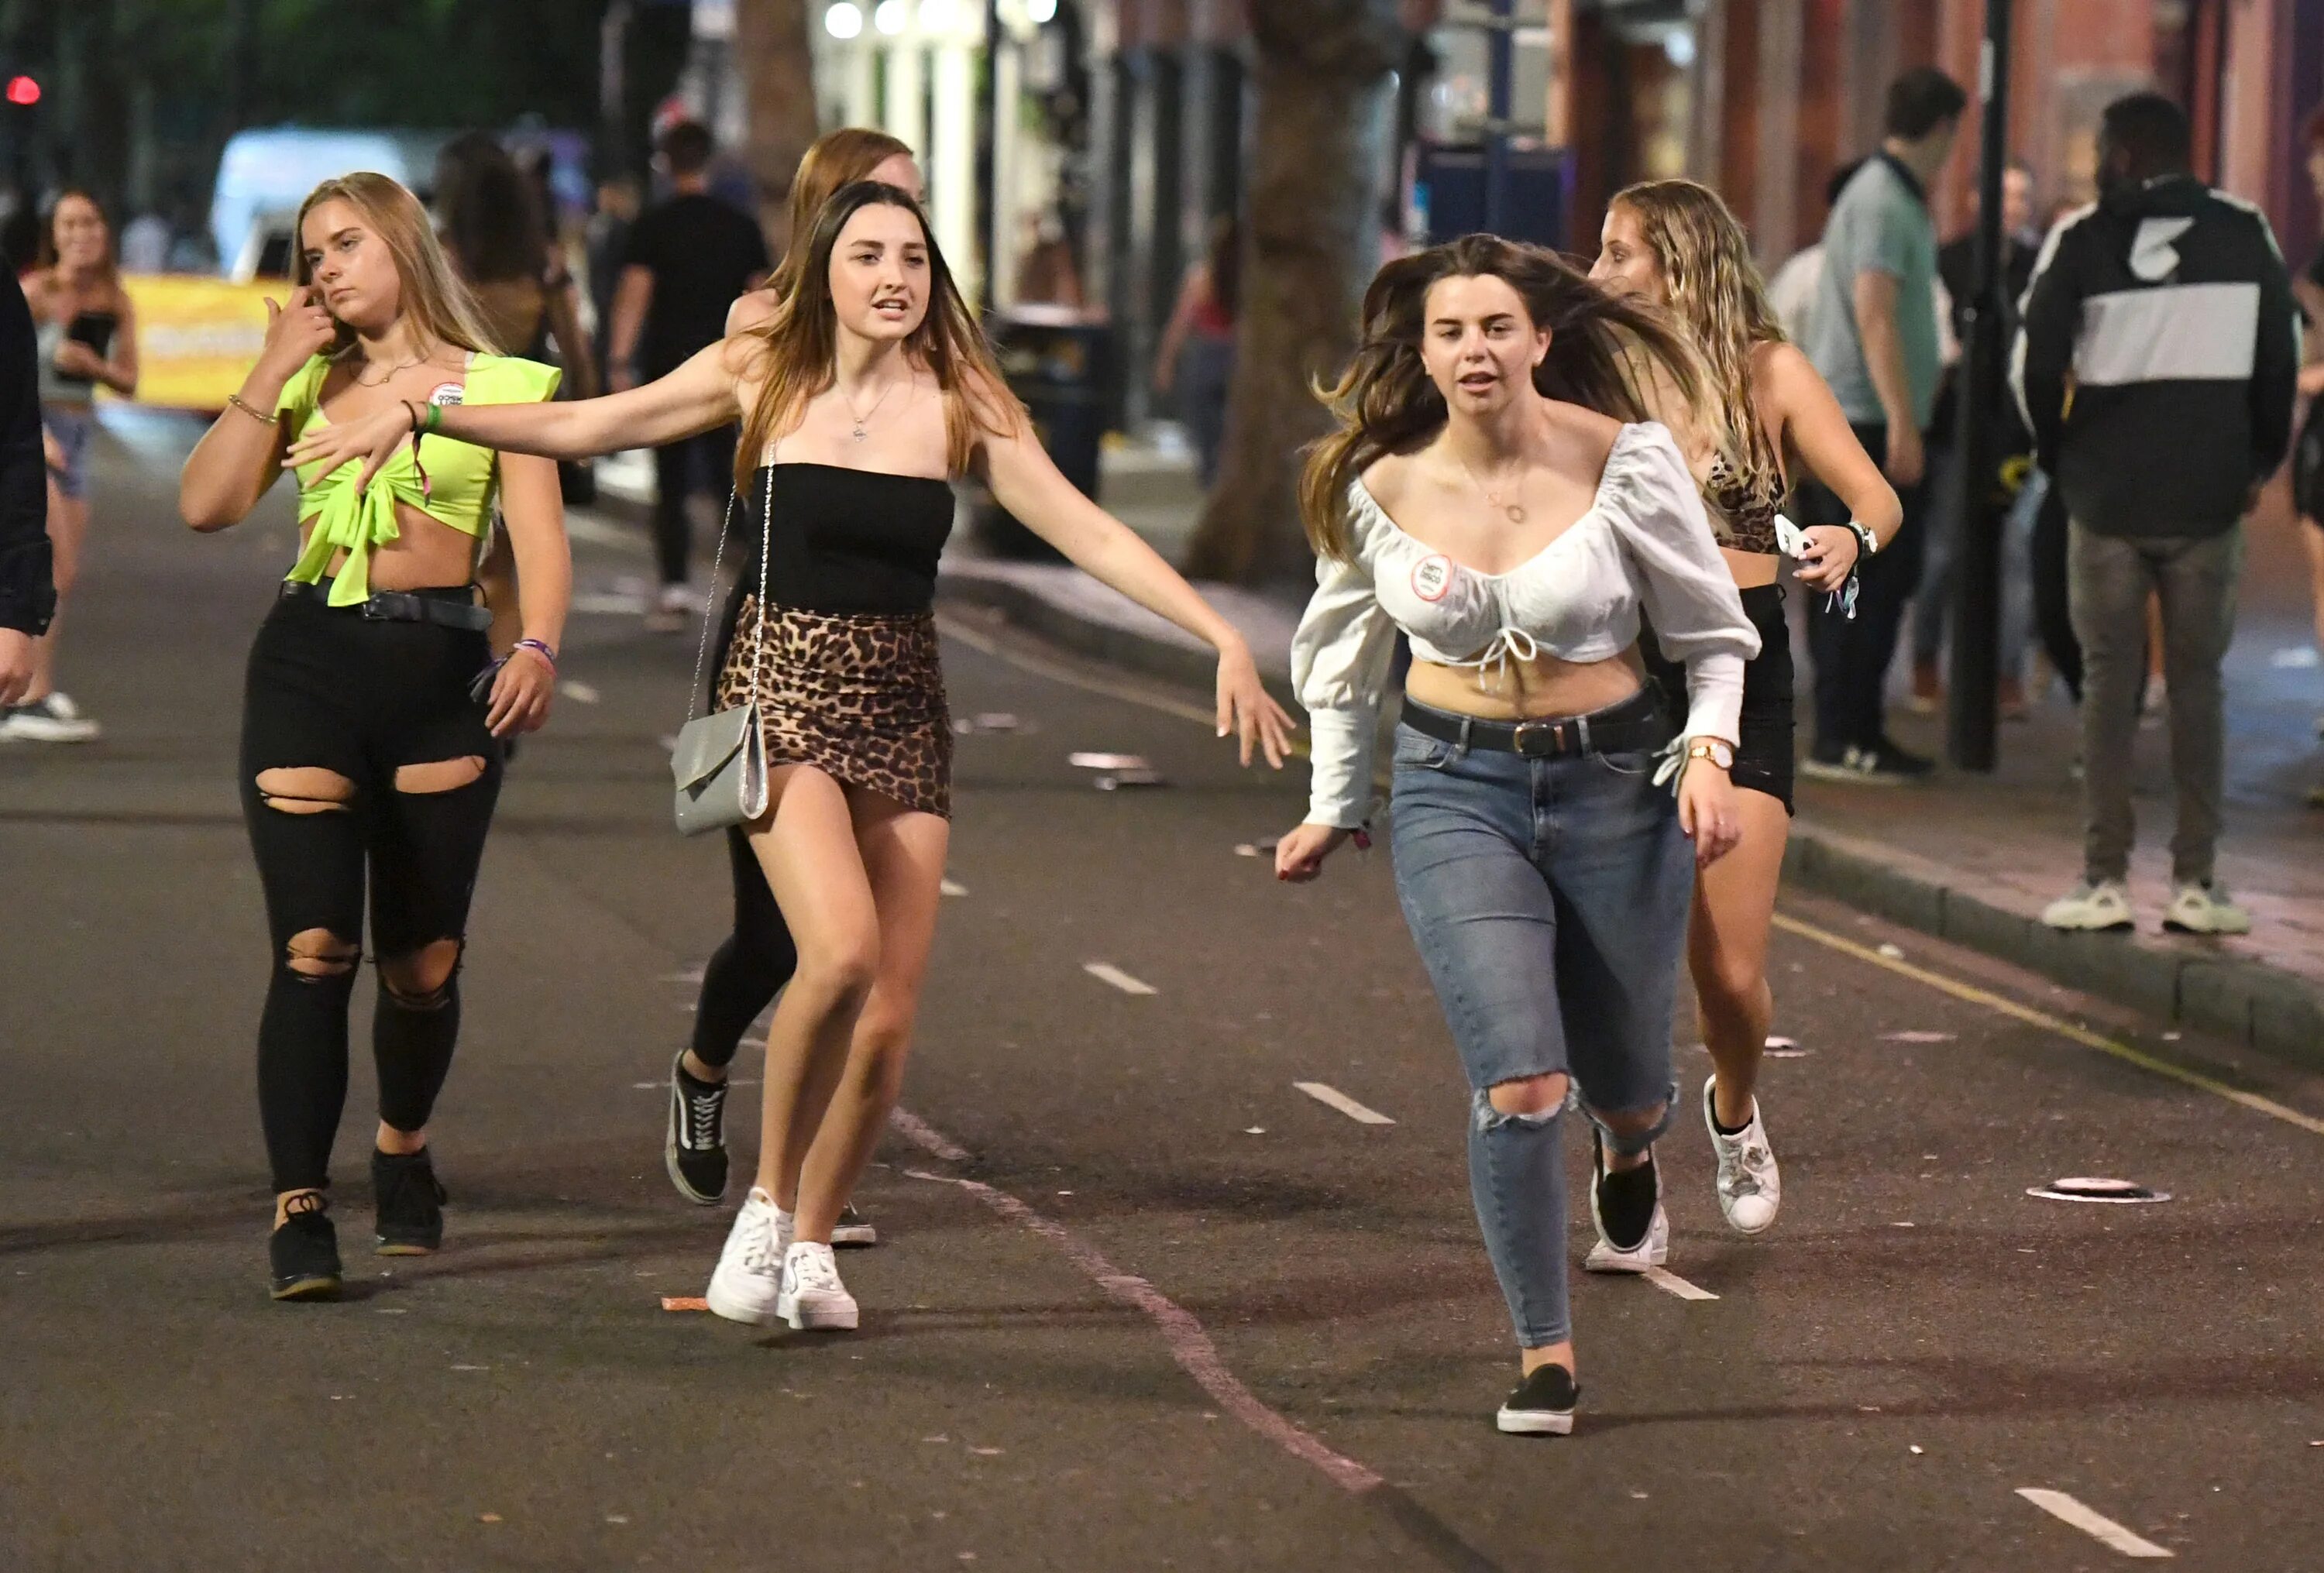 Uk girls. Англичанки на улице. Красивые англичанки на улицах. Британские девушки на улицах. Девчонки гуляют.